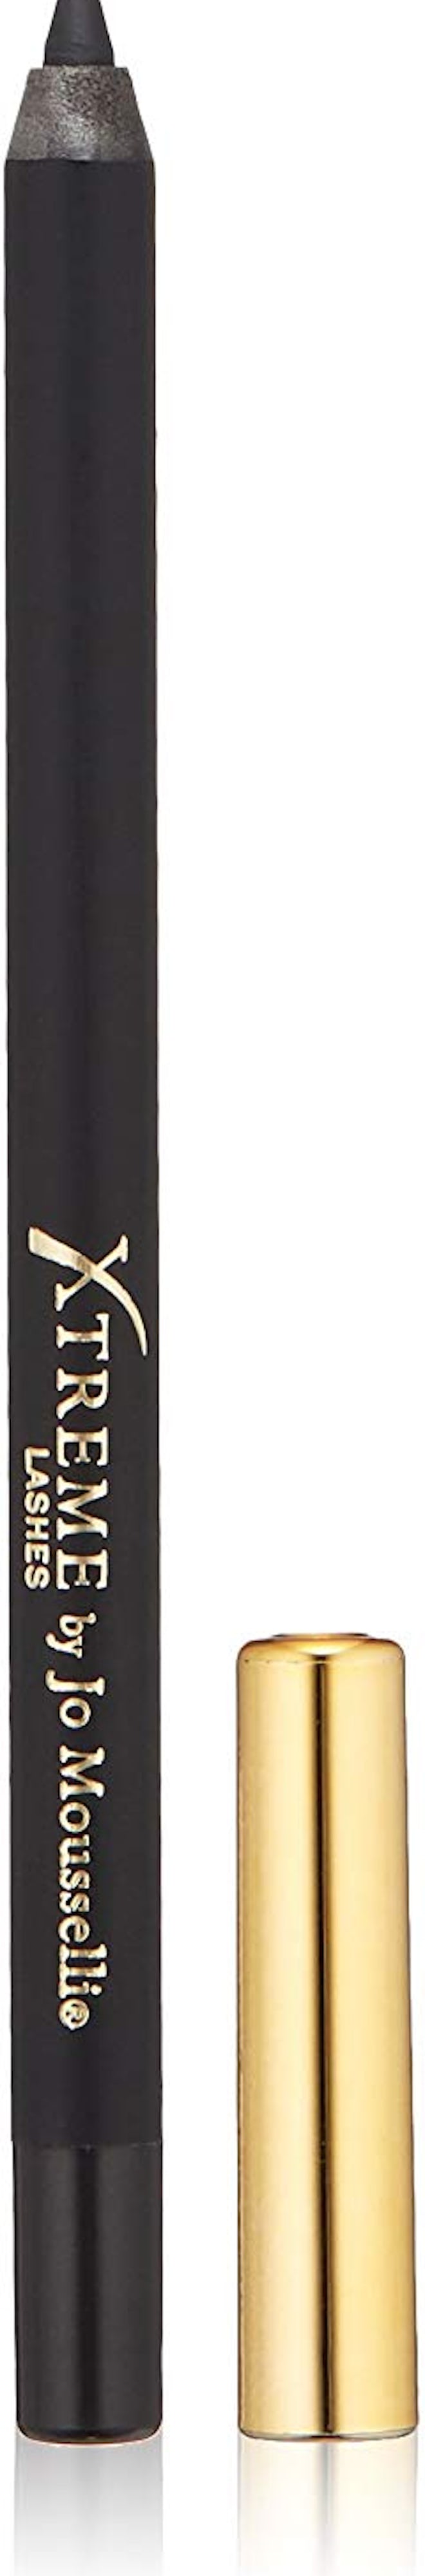 Xtreme Lashes Glideliner Long Lasting Eye Pencil